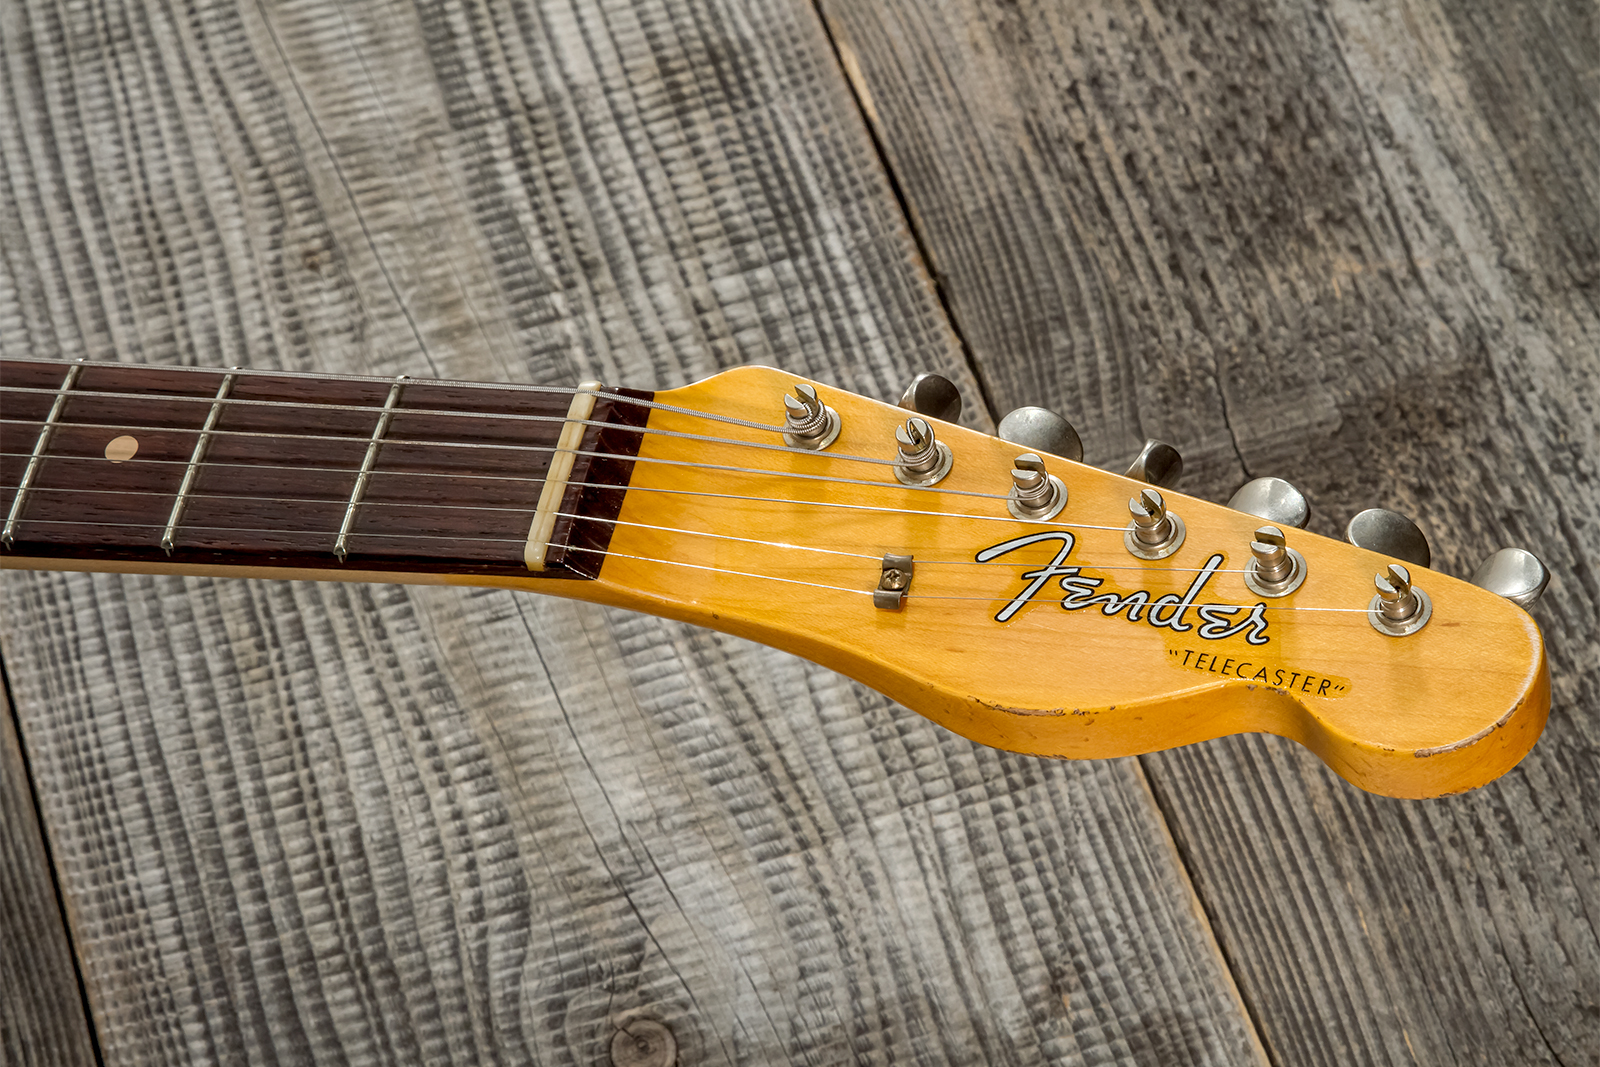 Fender Custom Shop Tele 1960 2s Ht Rw #cz569492 - Relic Natural Blonde - Tel shape electric guitar - Variation 8